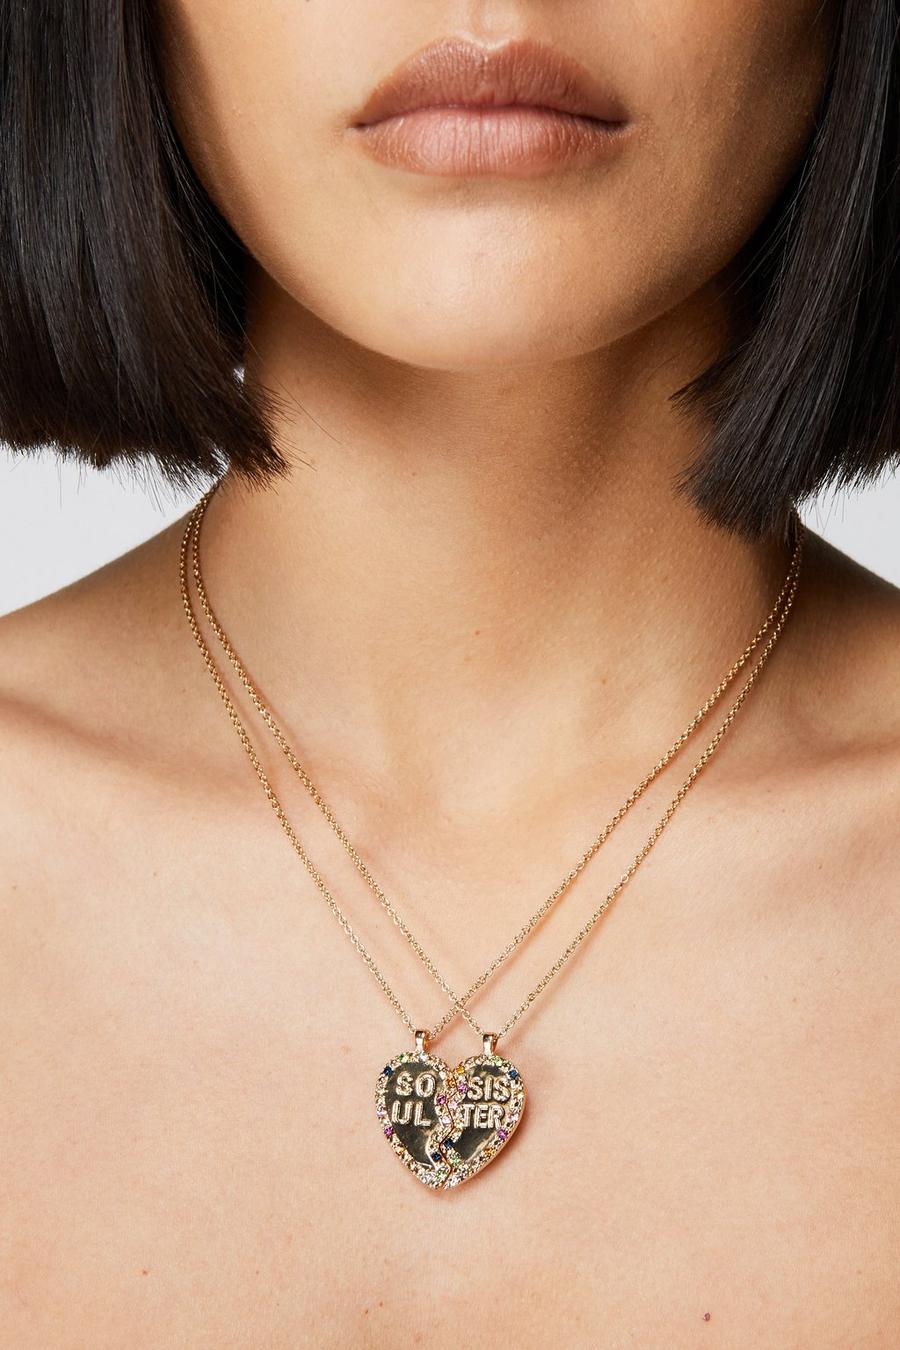 Embellished Heart Friendship Charm Necklace